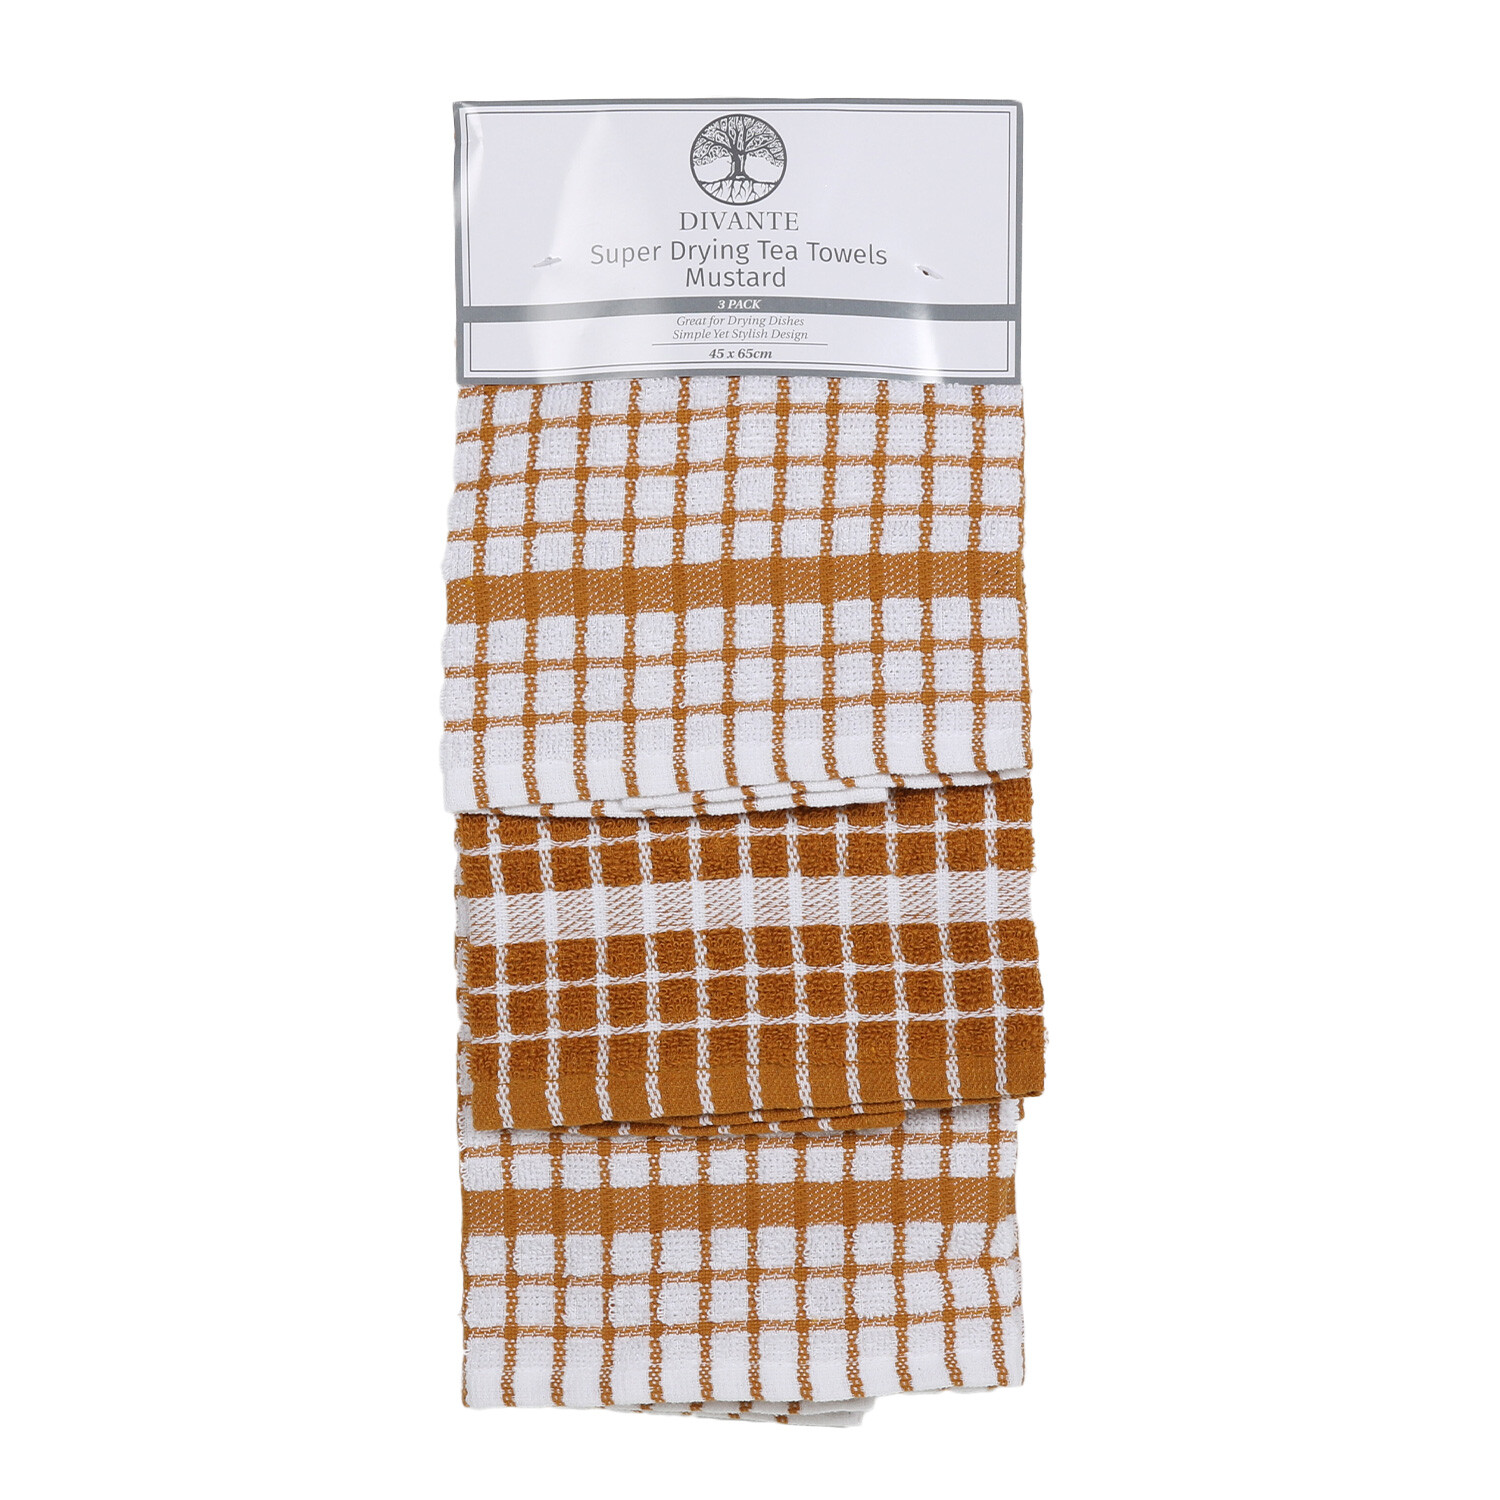 Pack of 3 Super Drying Tea Towels - Mustard Image